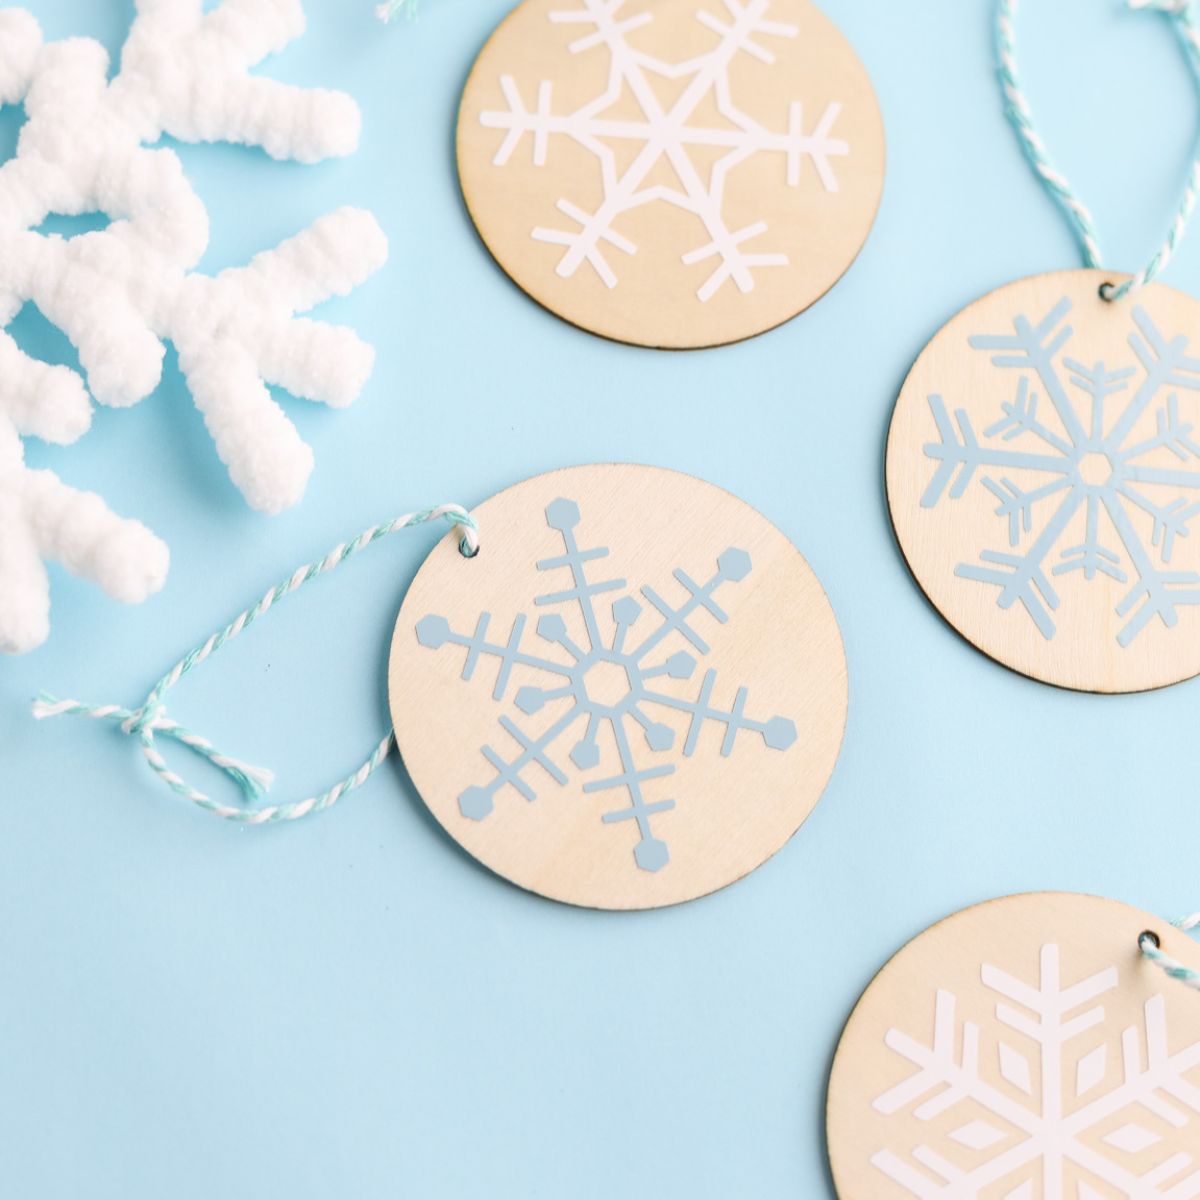 DIY Snowflake Ornament with Vinyl